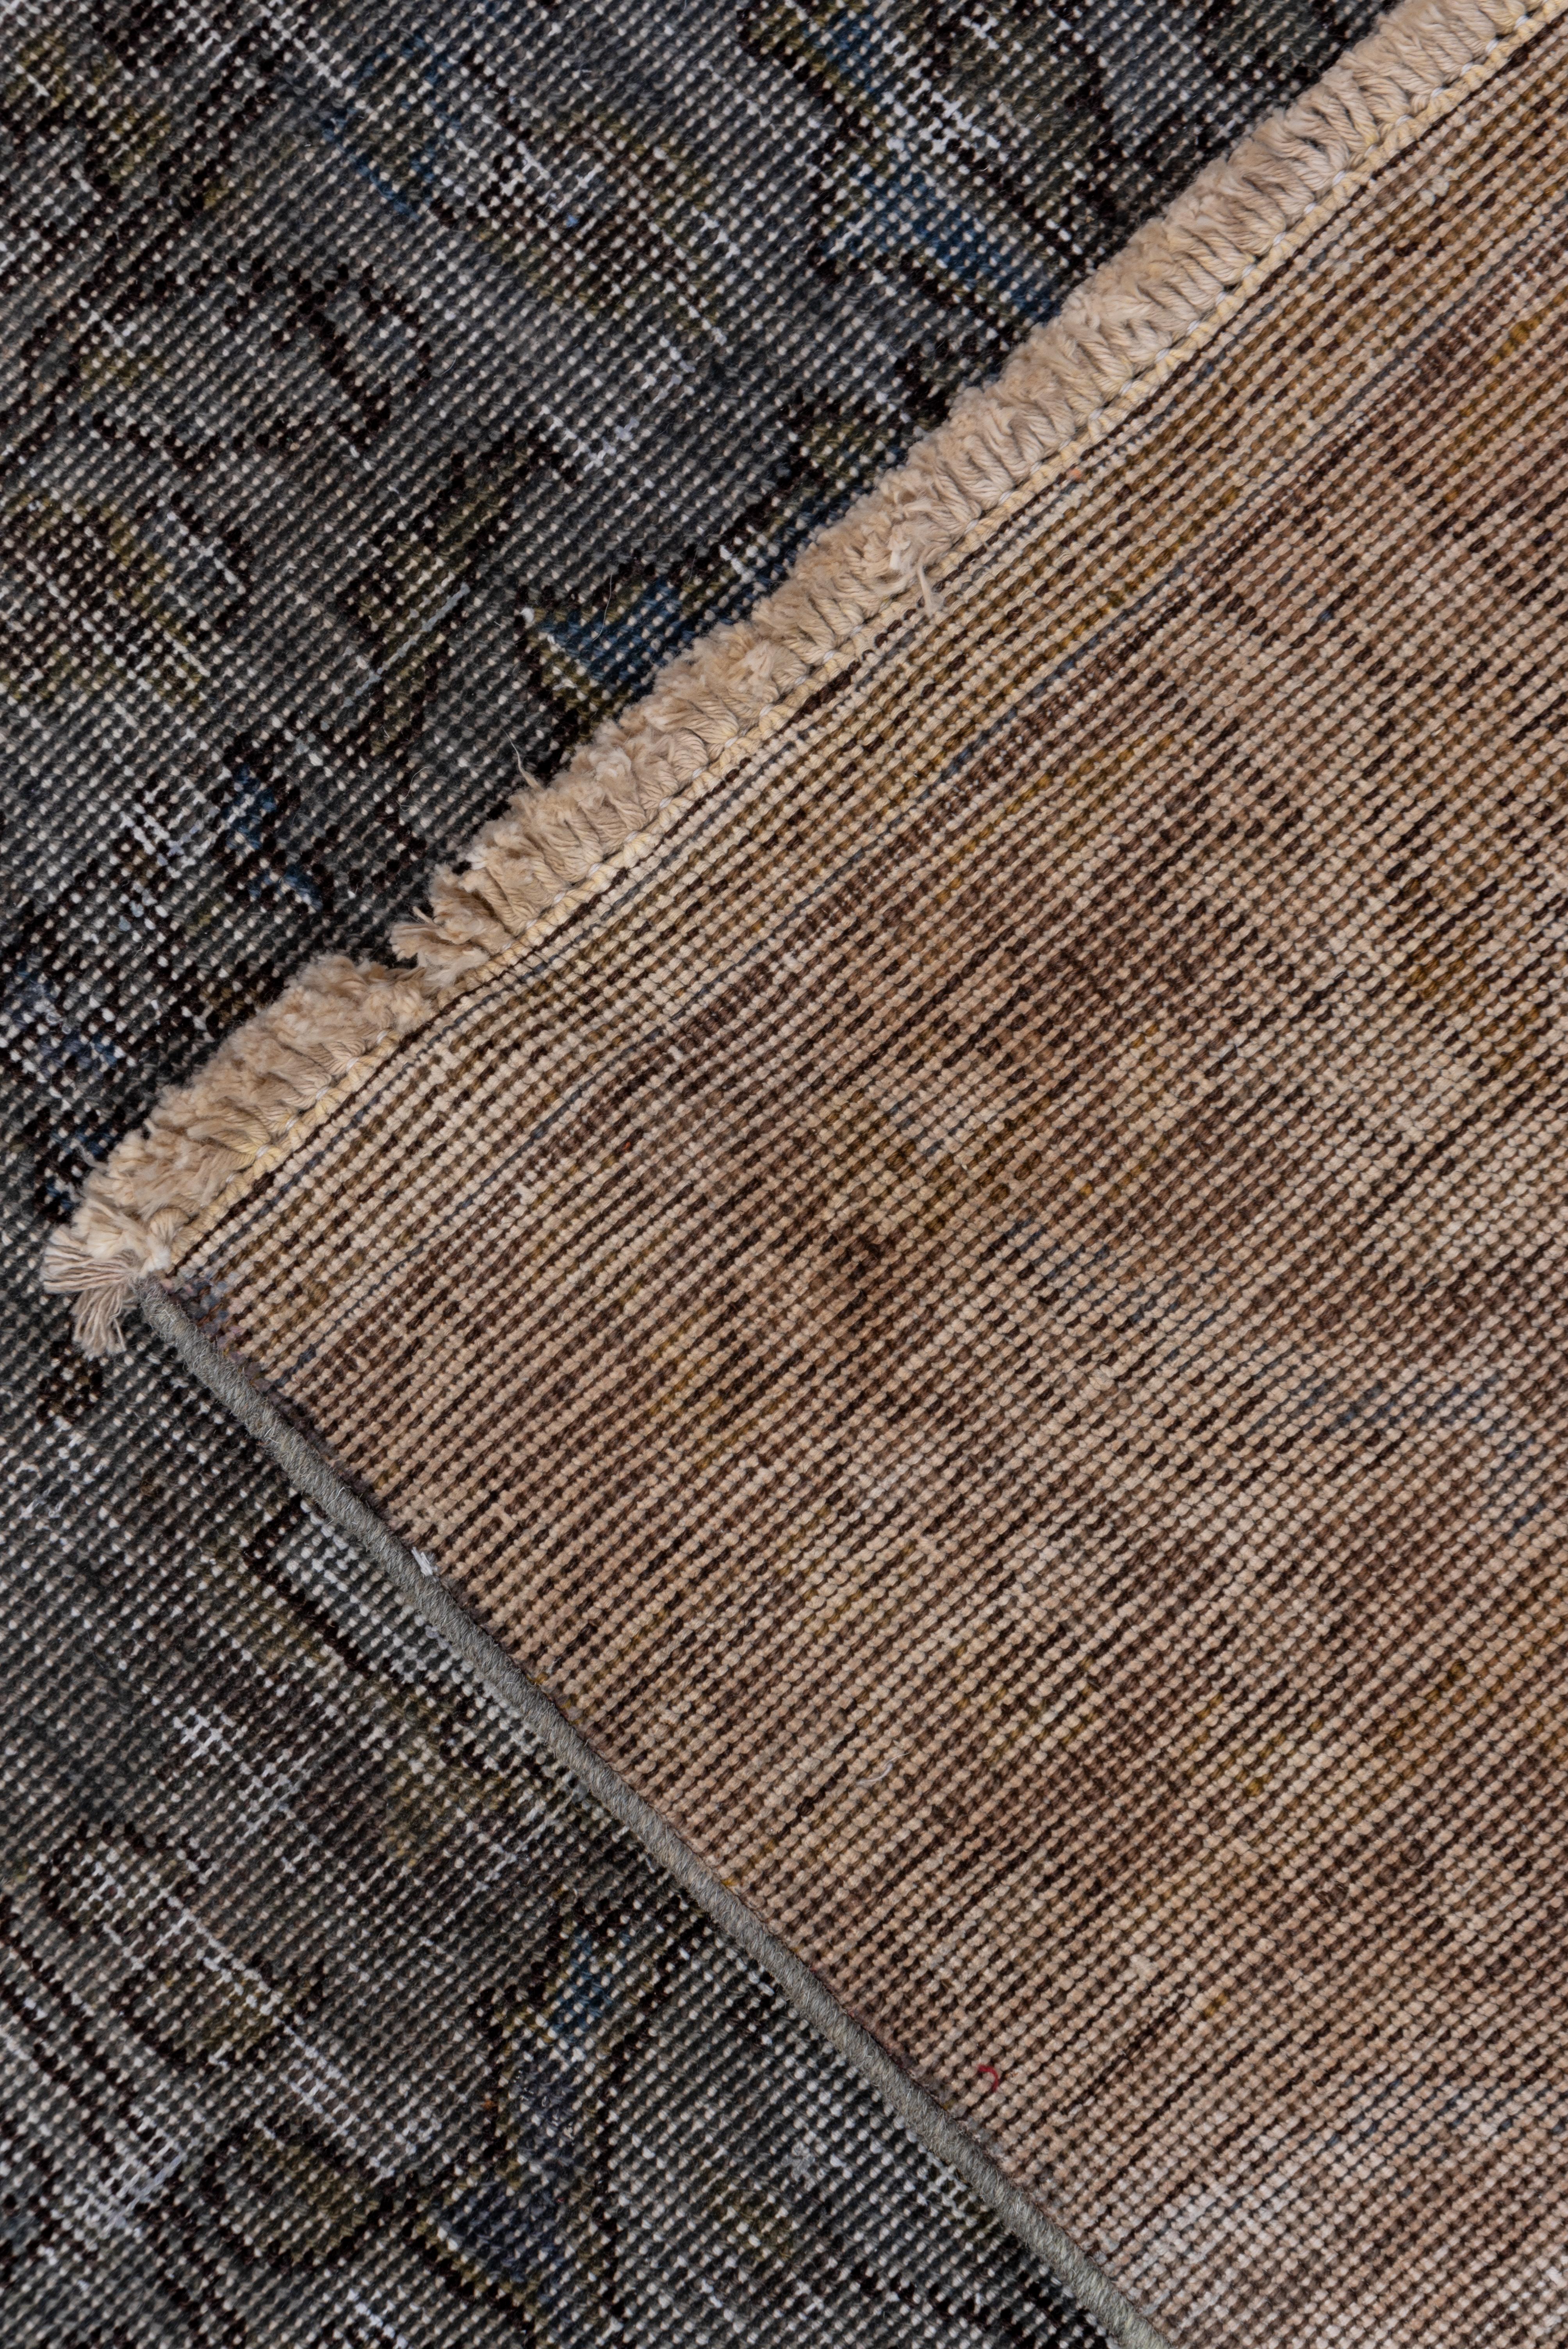 Mid-20th Century Distressed Gray Overdyed Carpet